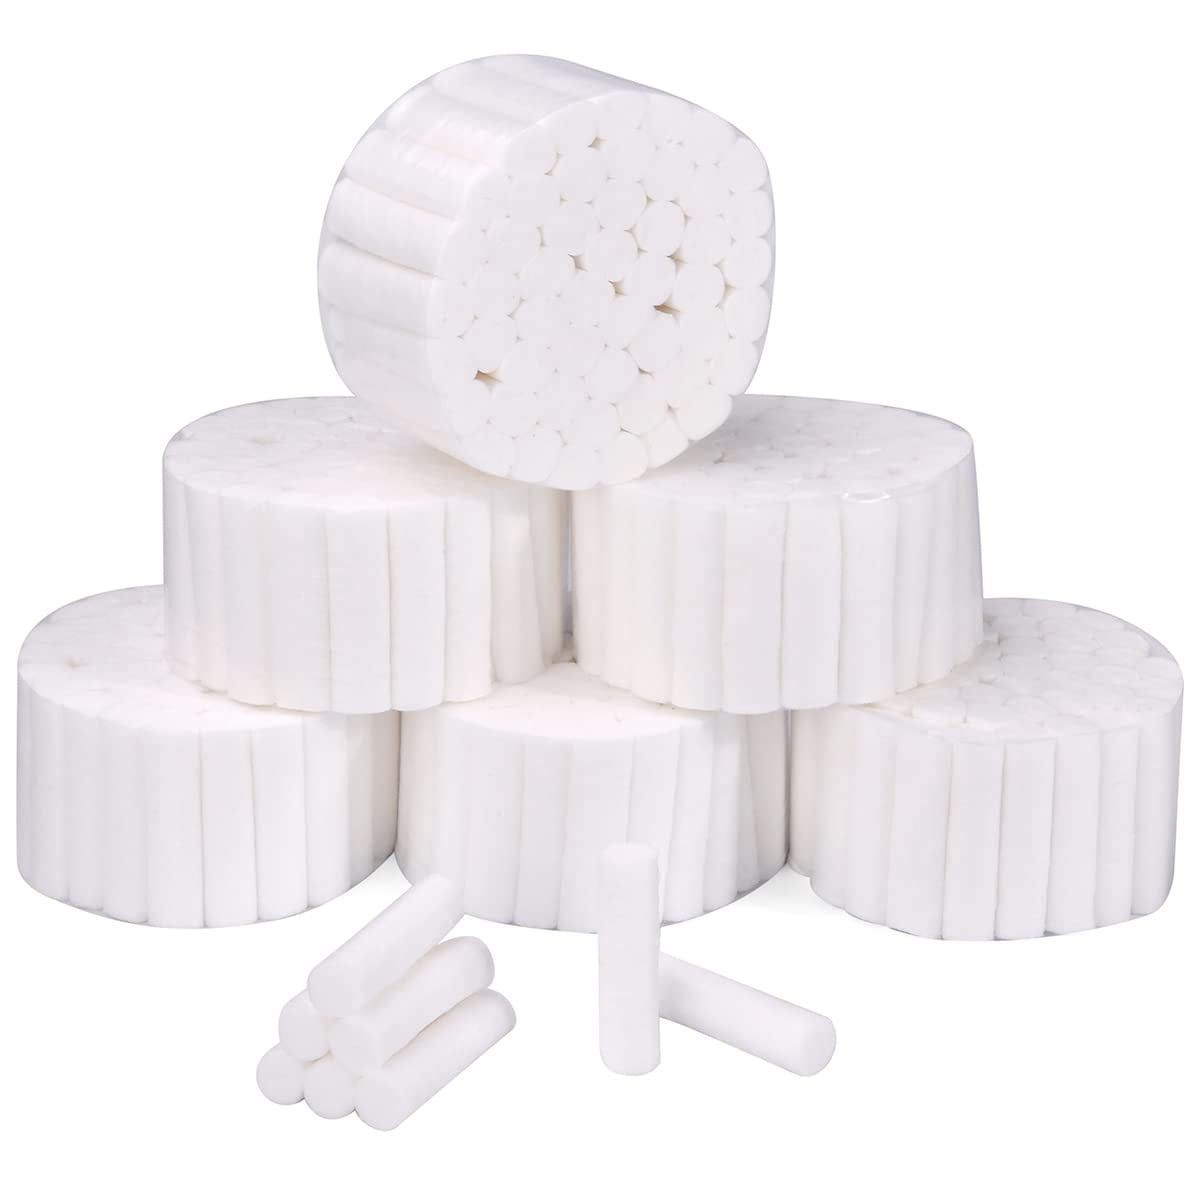 Cotton Dental Rolls, #2 Medium, 1 1/2 x 3/8